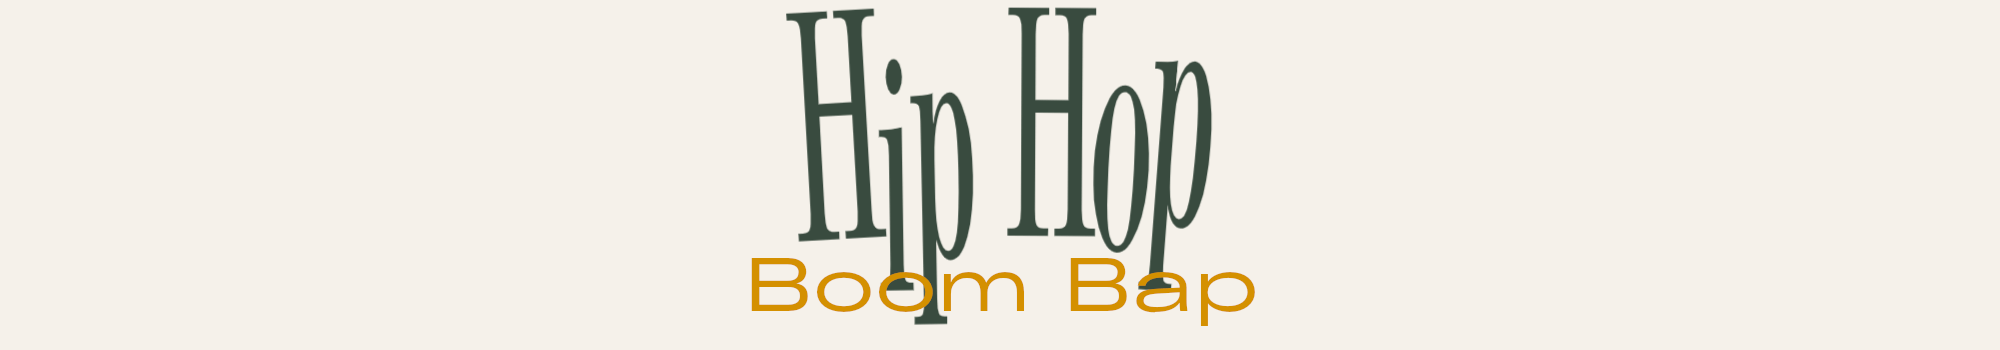 Rubrik till kategori: Hip hop - Boom Bap